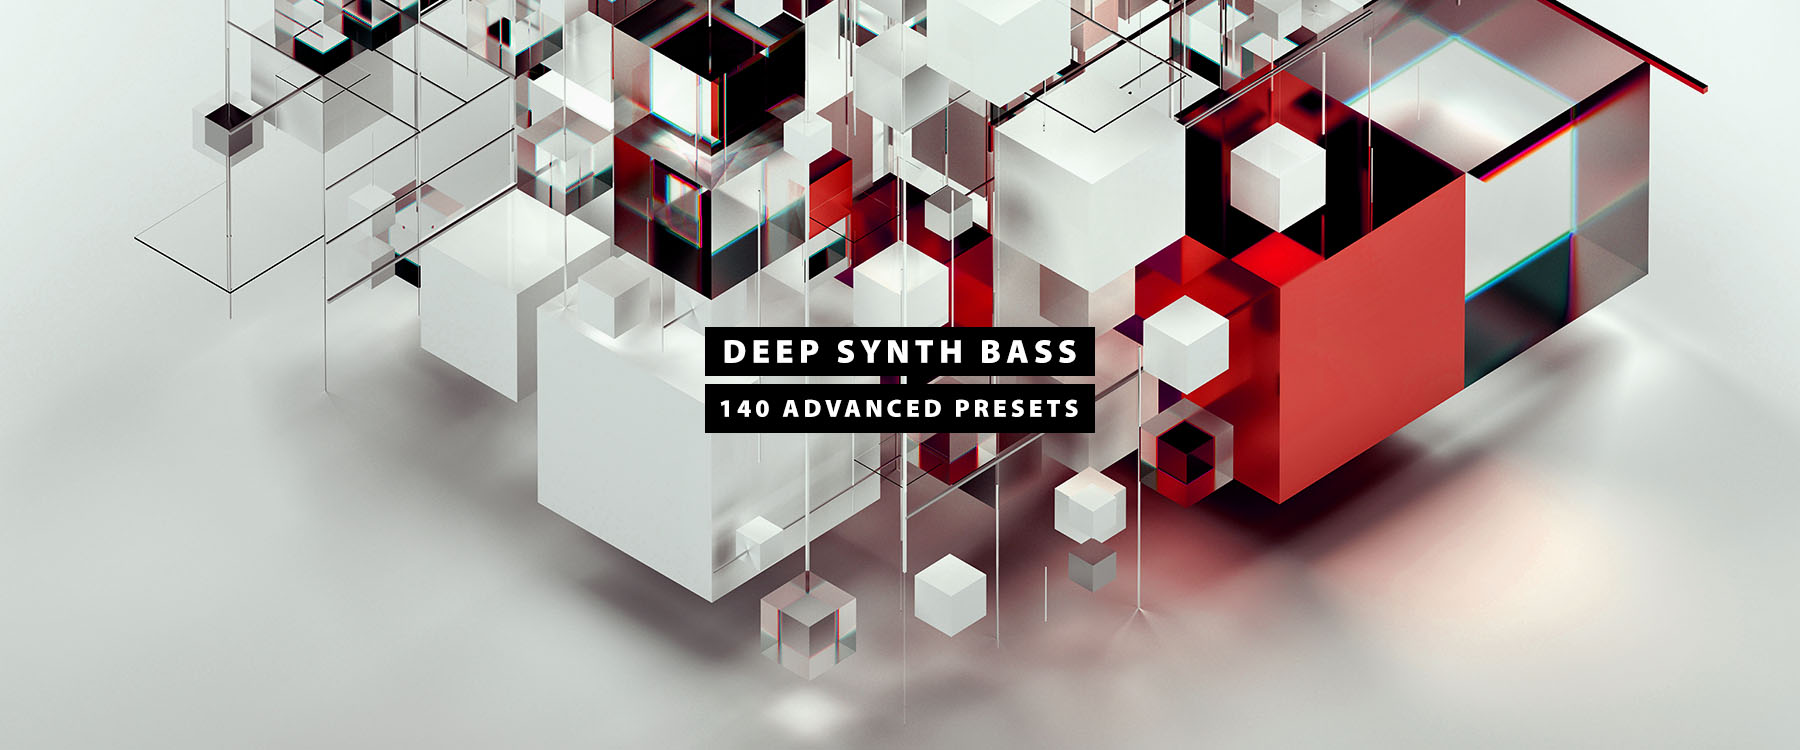 LP24 Audio - Deep Synth Bass